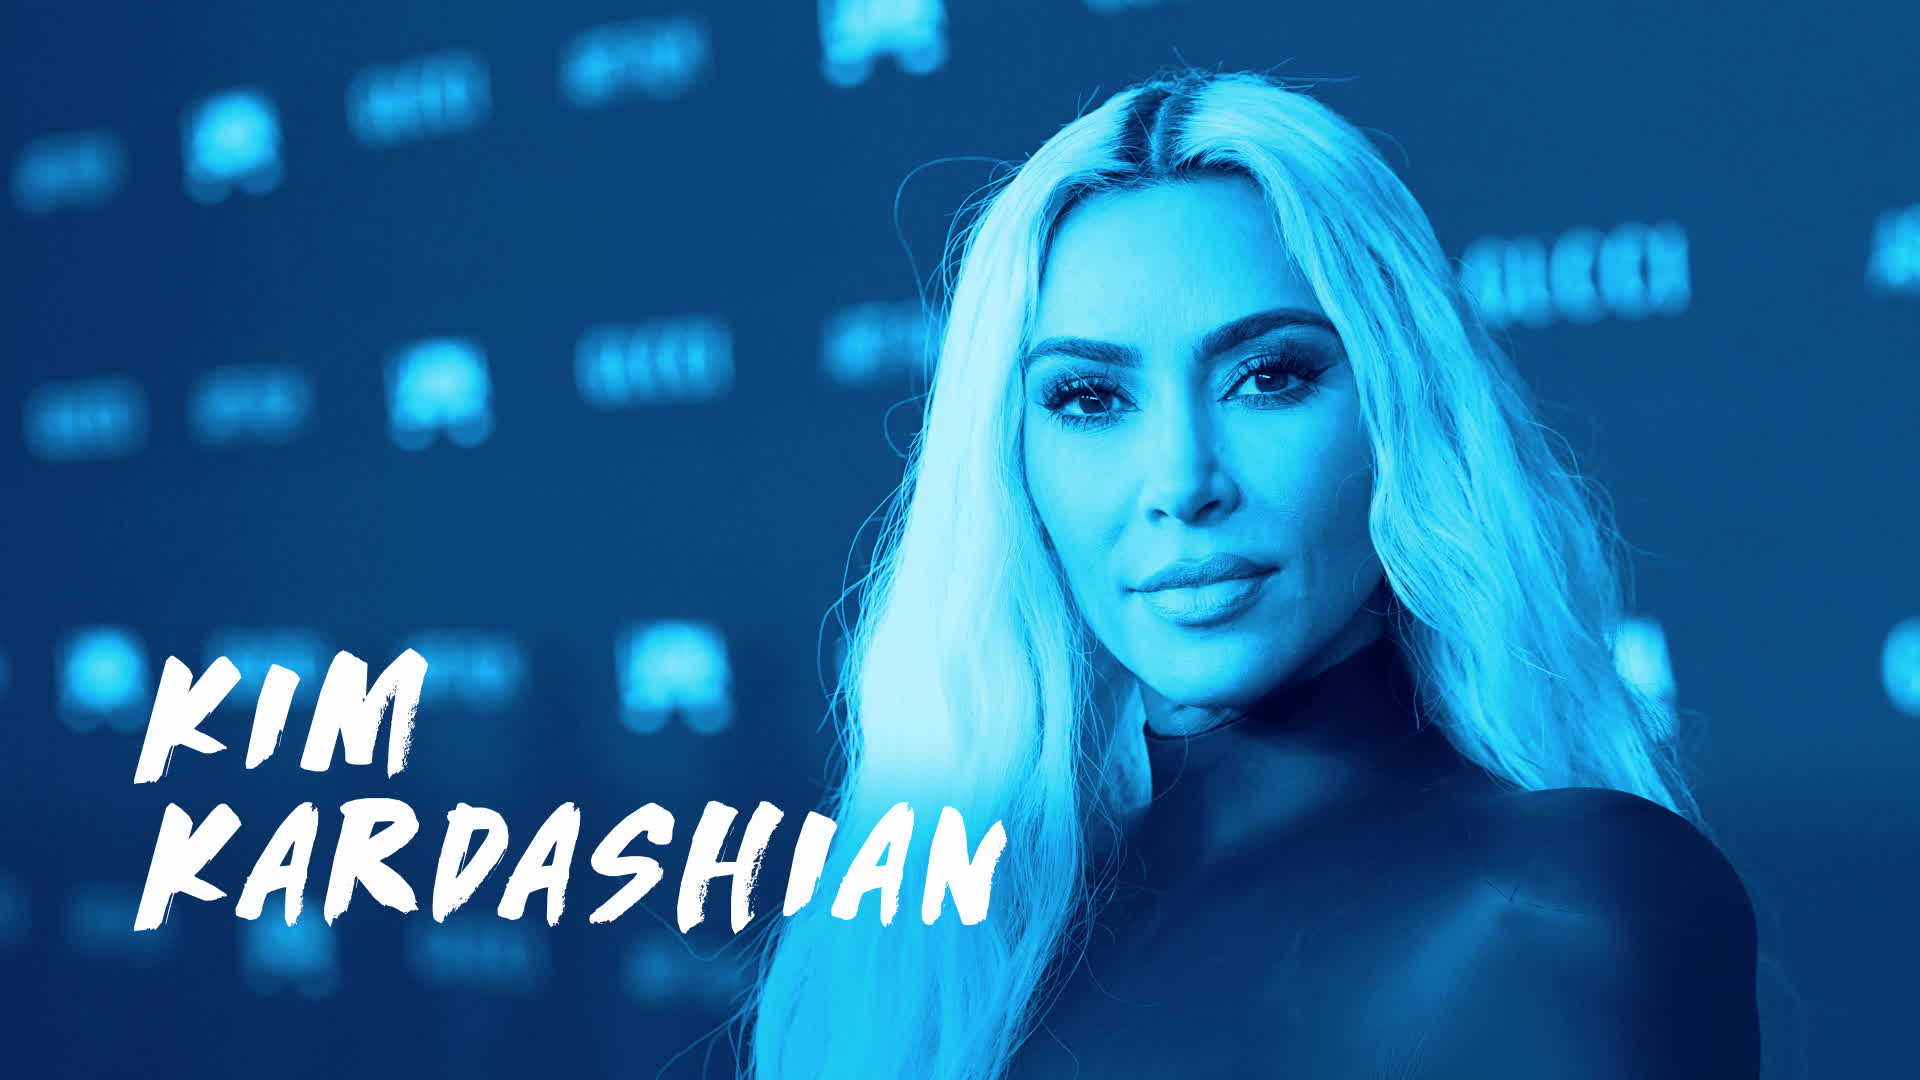 SKIMS - NYC - now's your chance to meet Kim Kardashian